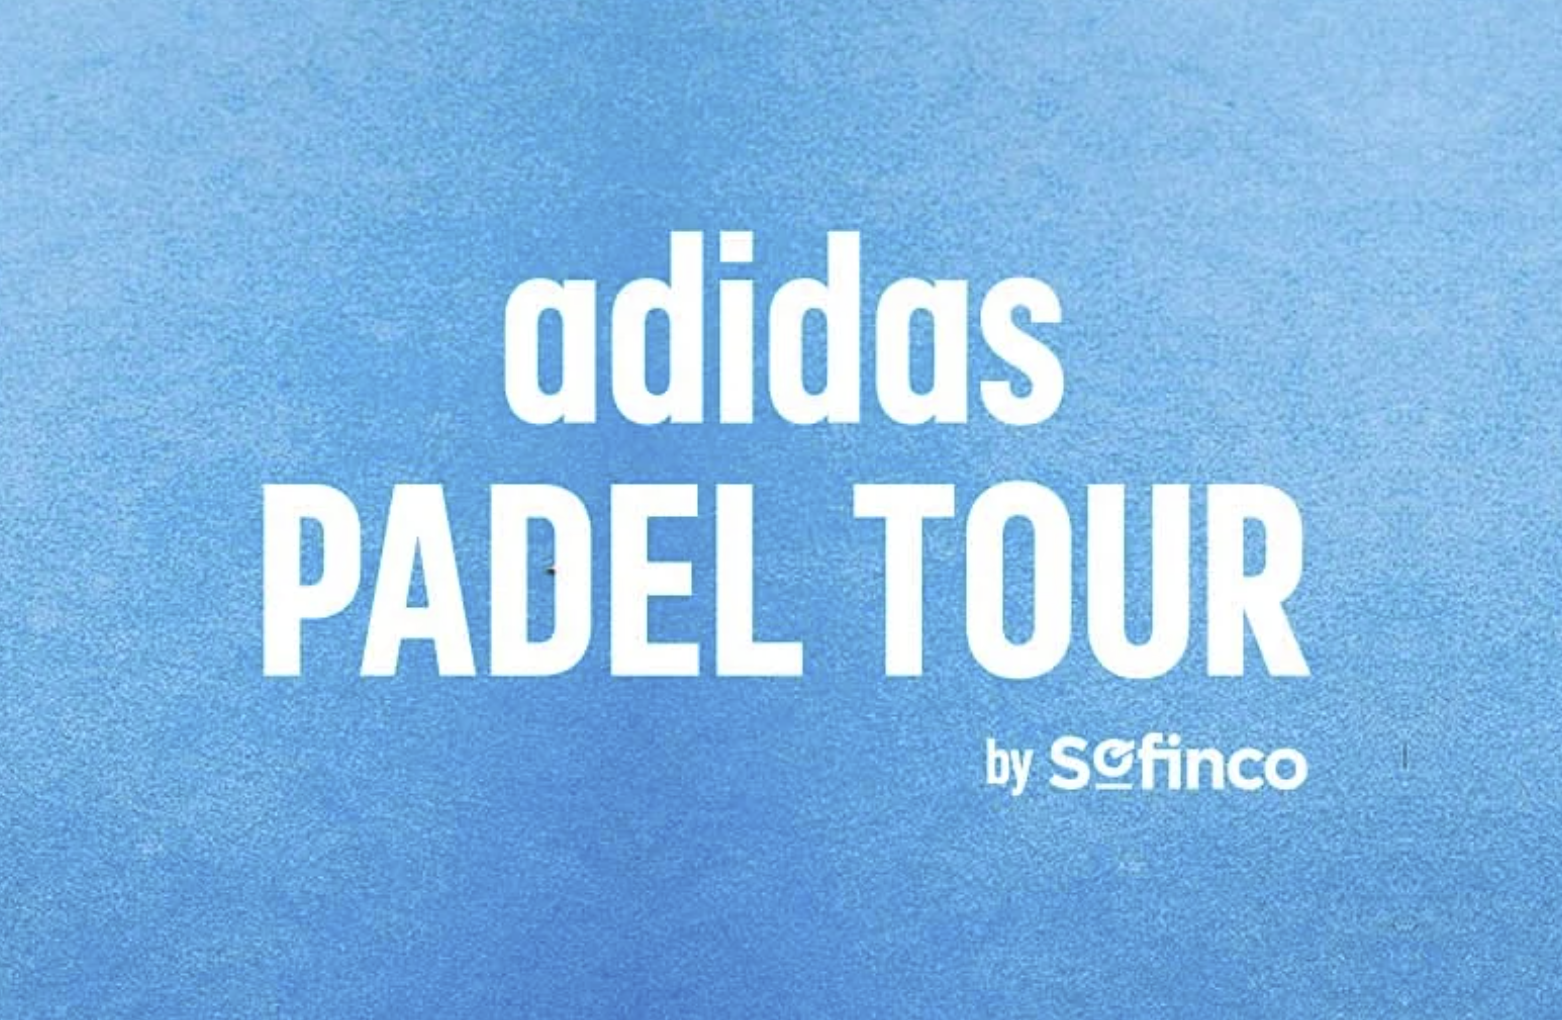 logo adidas padel tour by sofinco